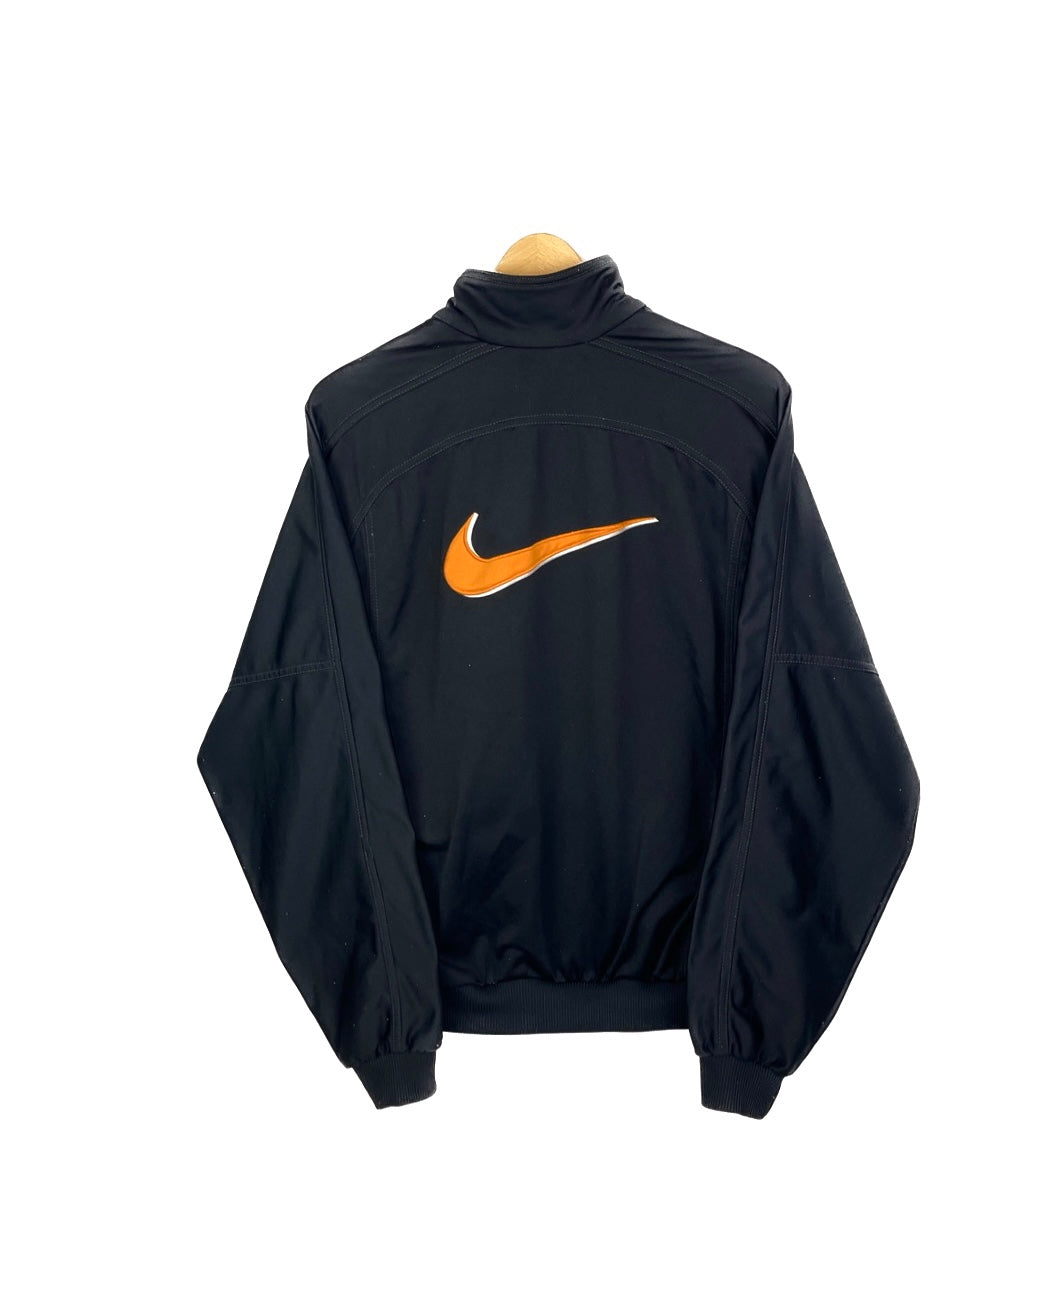 Nike Jacket - Medium